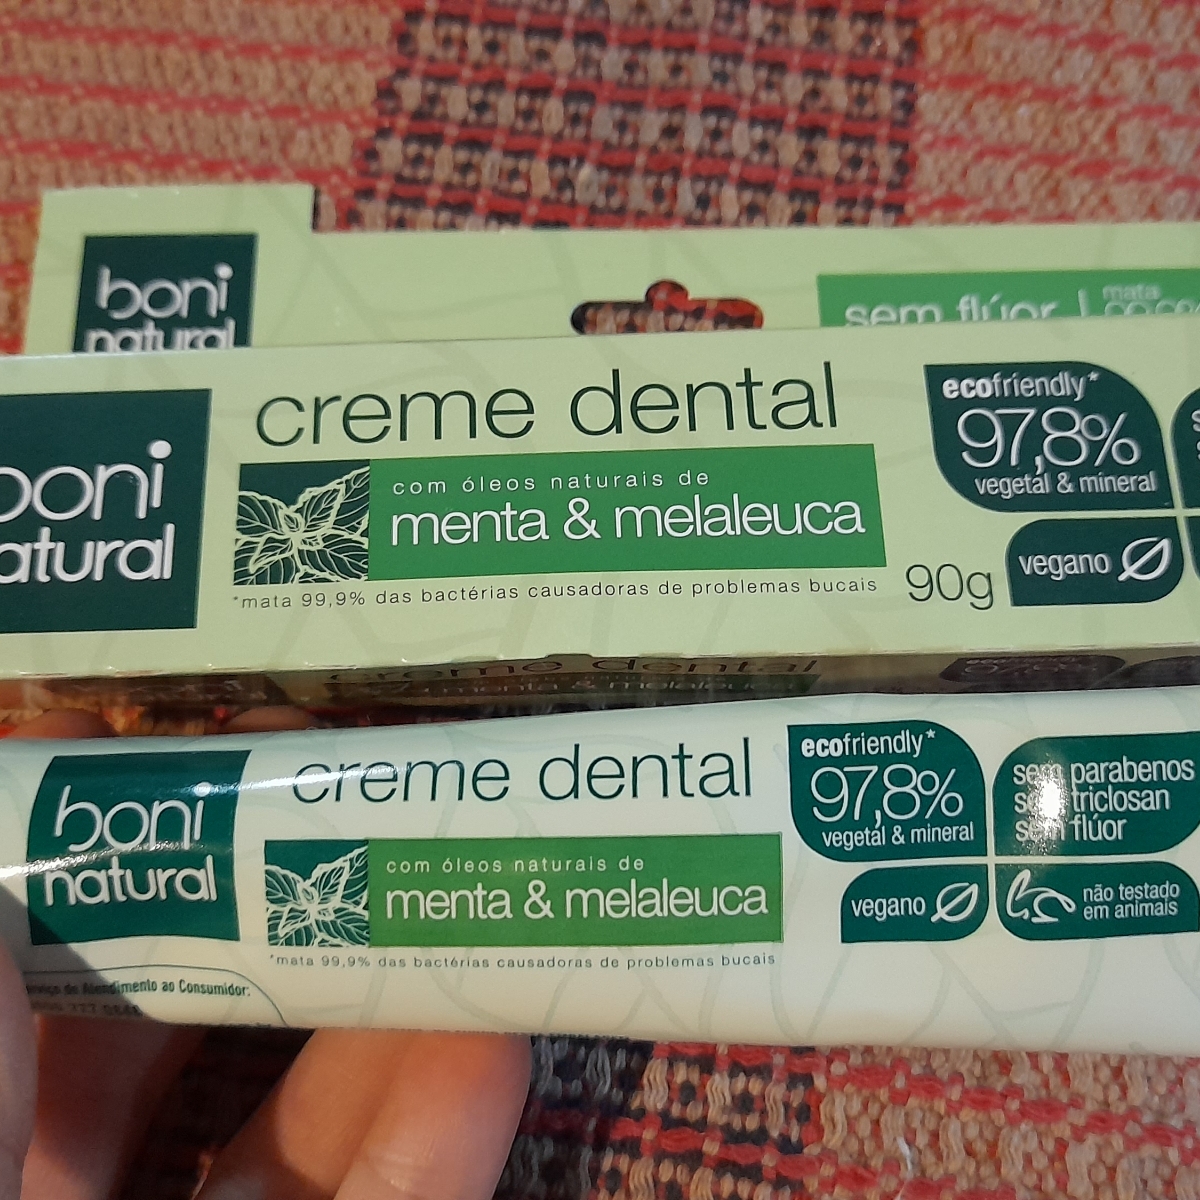 Boni natural Creme Dental Menta & Melaleuca Review | abillion